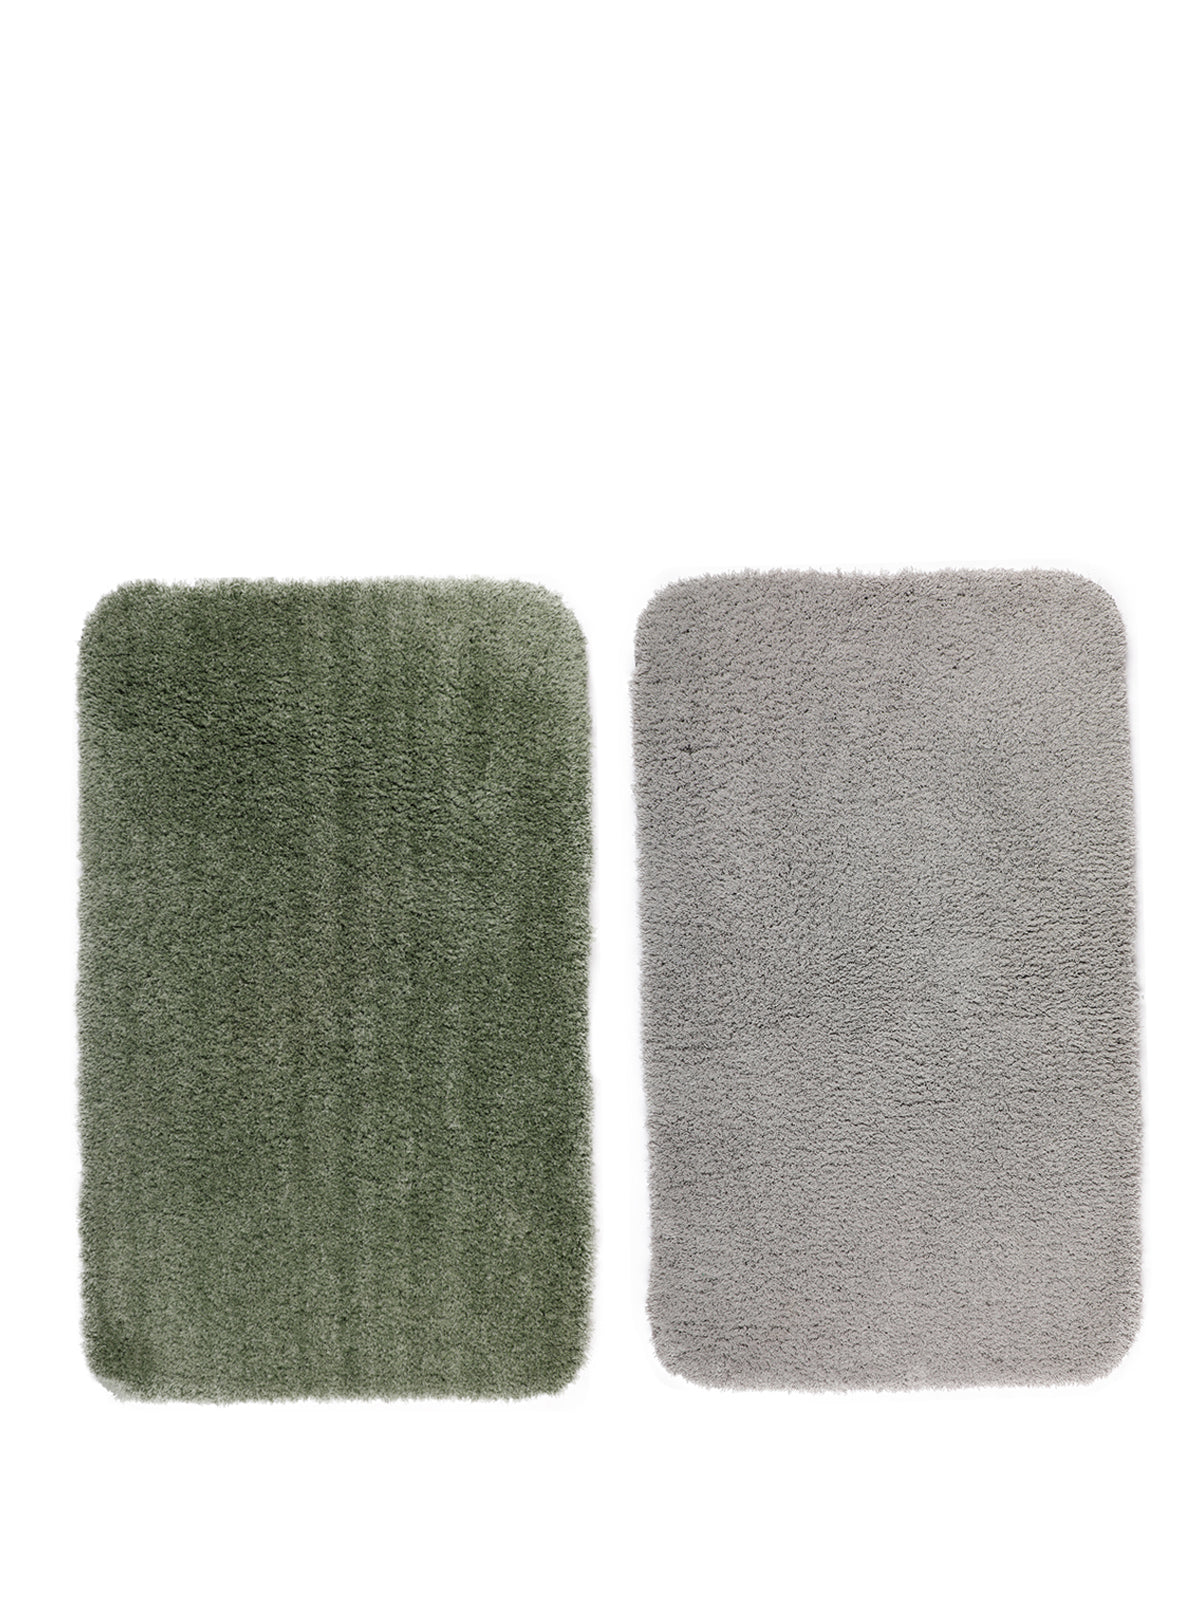 Green & Silver Set of 2 Solid Patterned Microfiber Bathmat